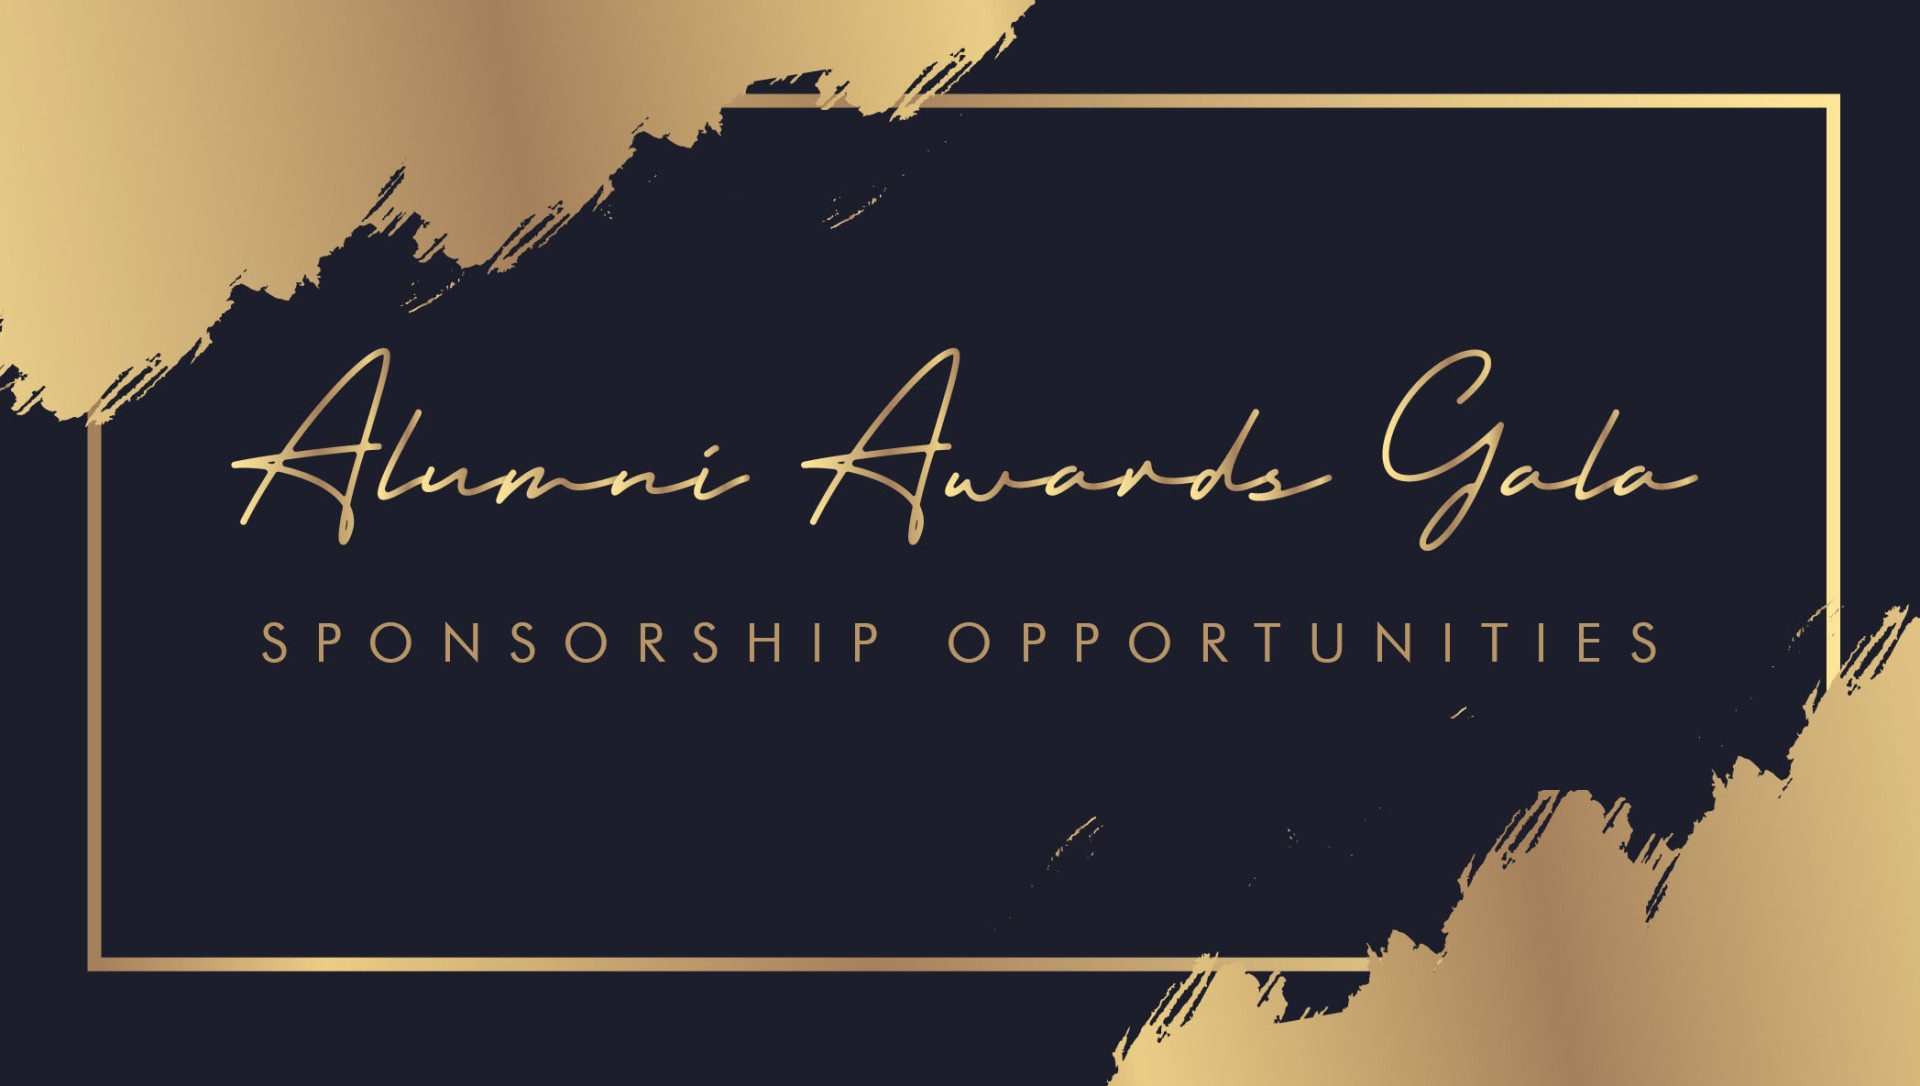 Alumni Awards Gala Sponsorship Opportunities